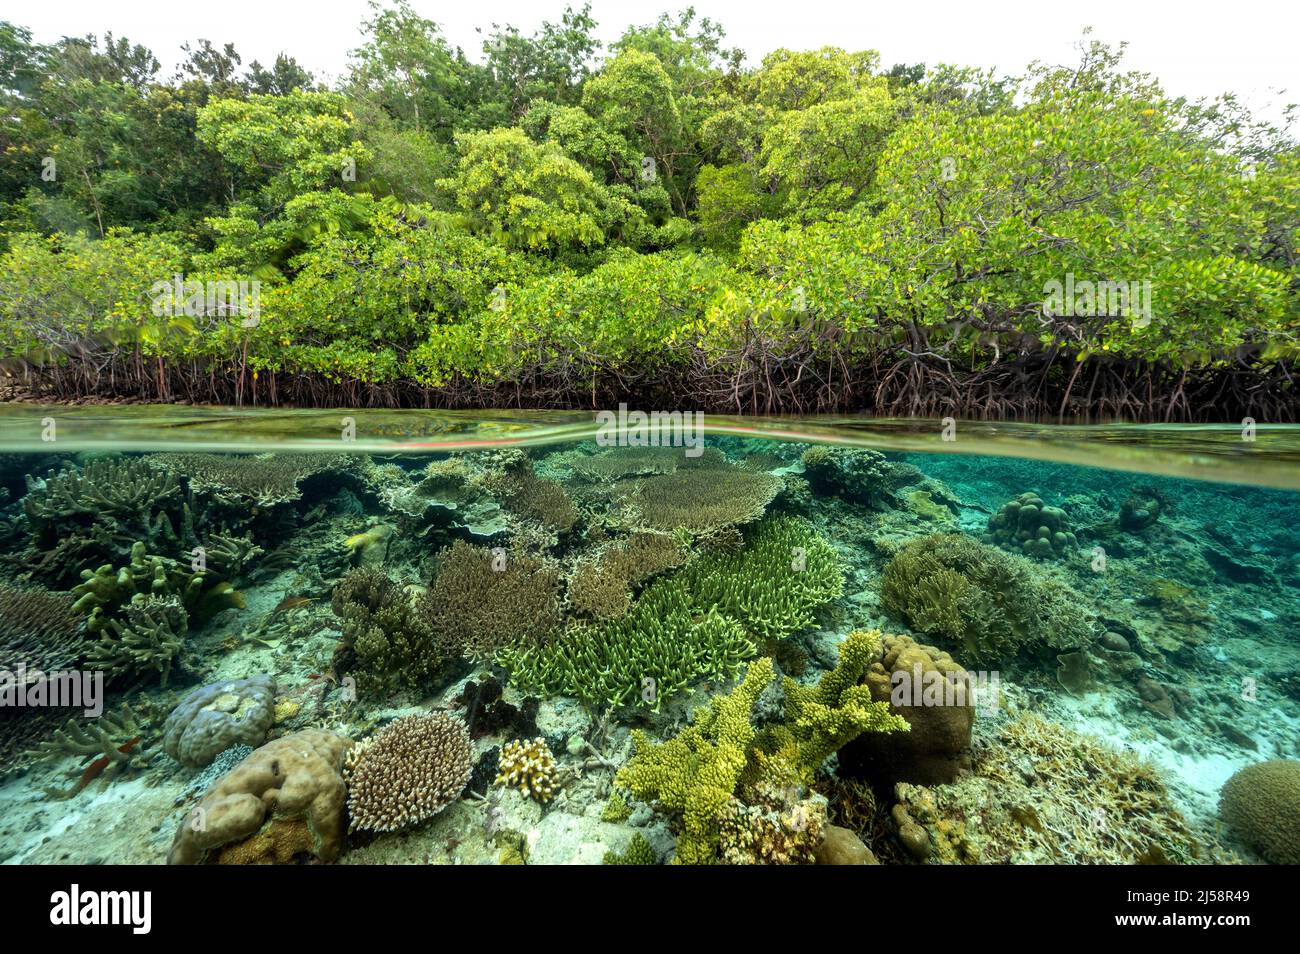 Mangrove forest and coral reefs in split shot, Gam Island Raja Ampat Indnonesia. Stock Photo